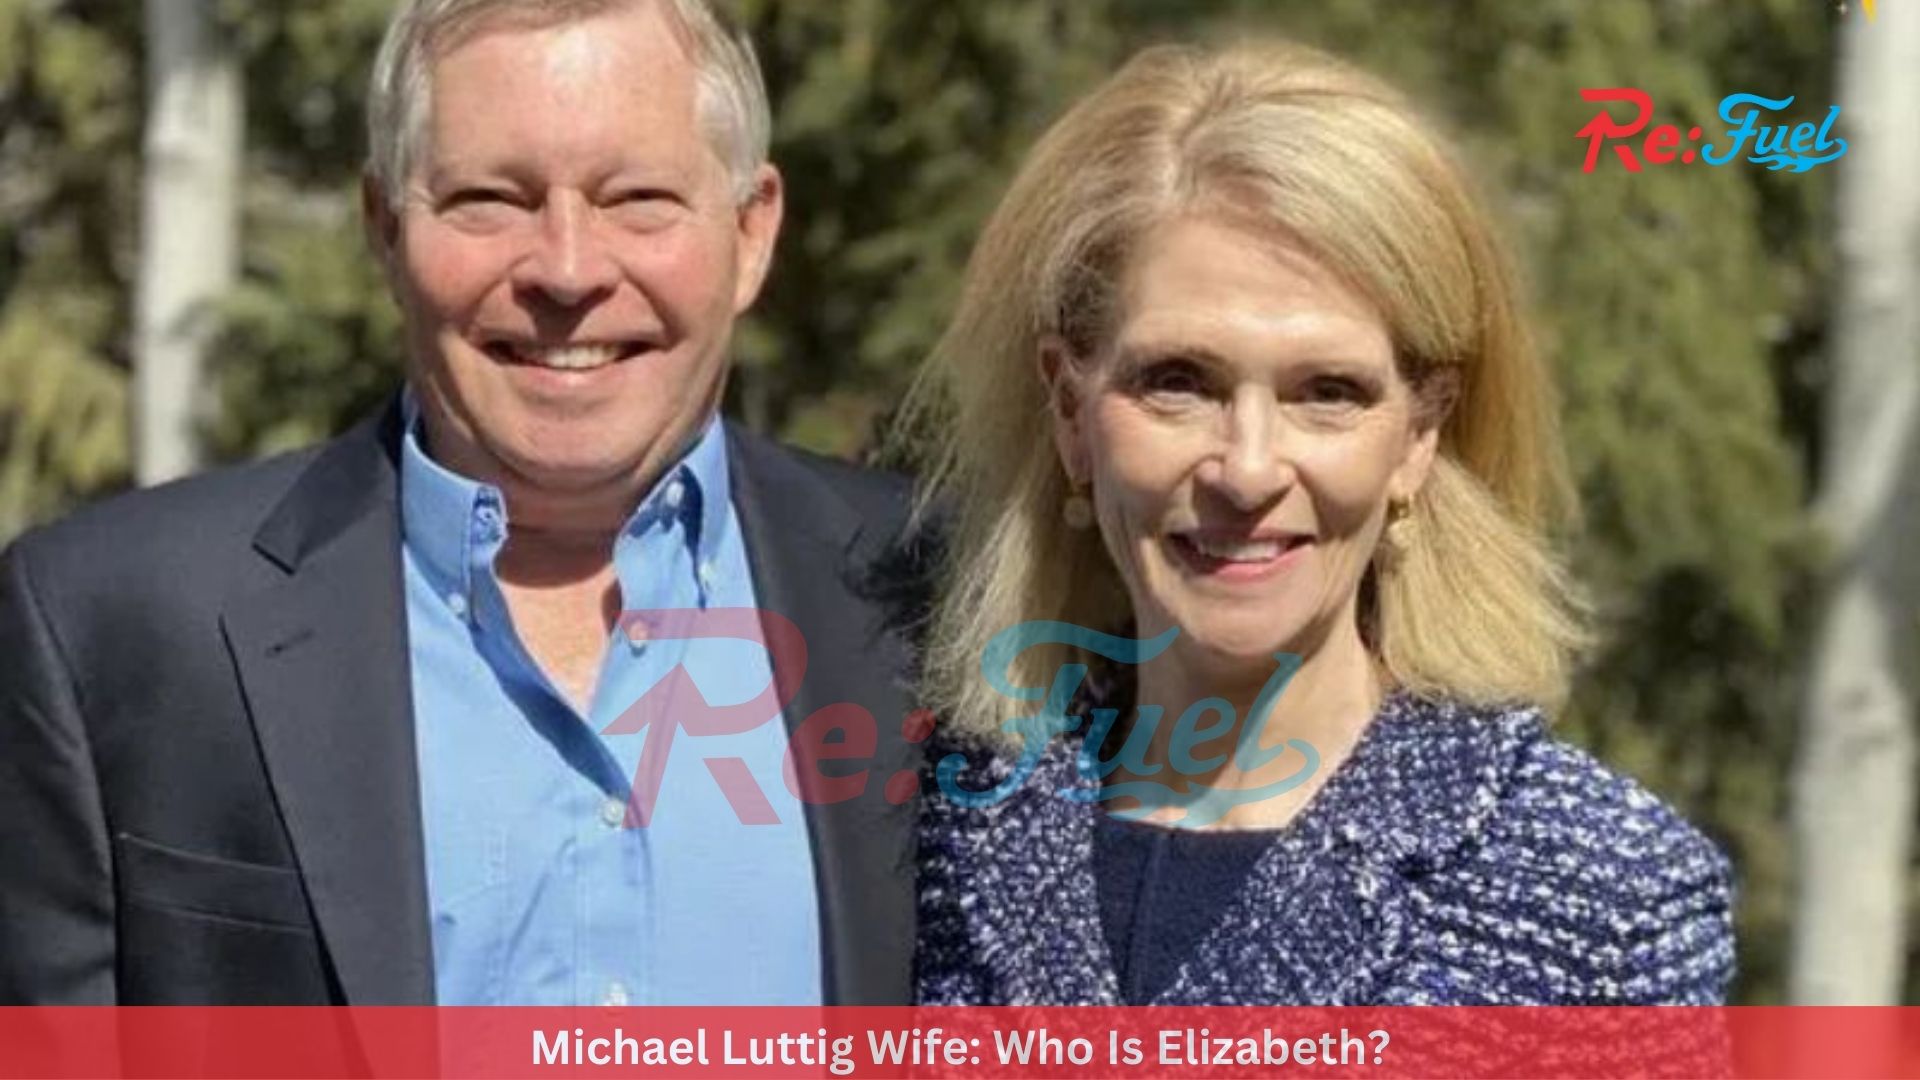 Michael Luttig Wife: Who Is Elizabeth?